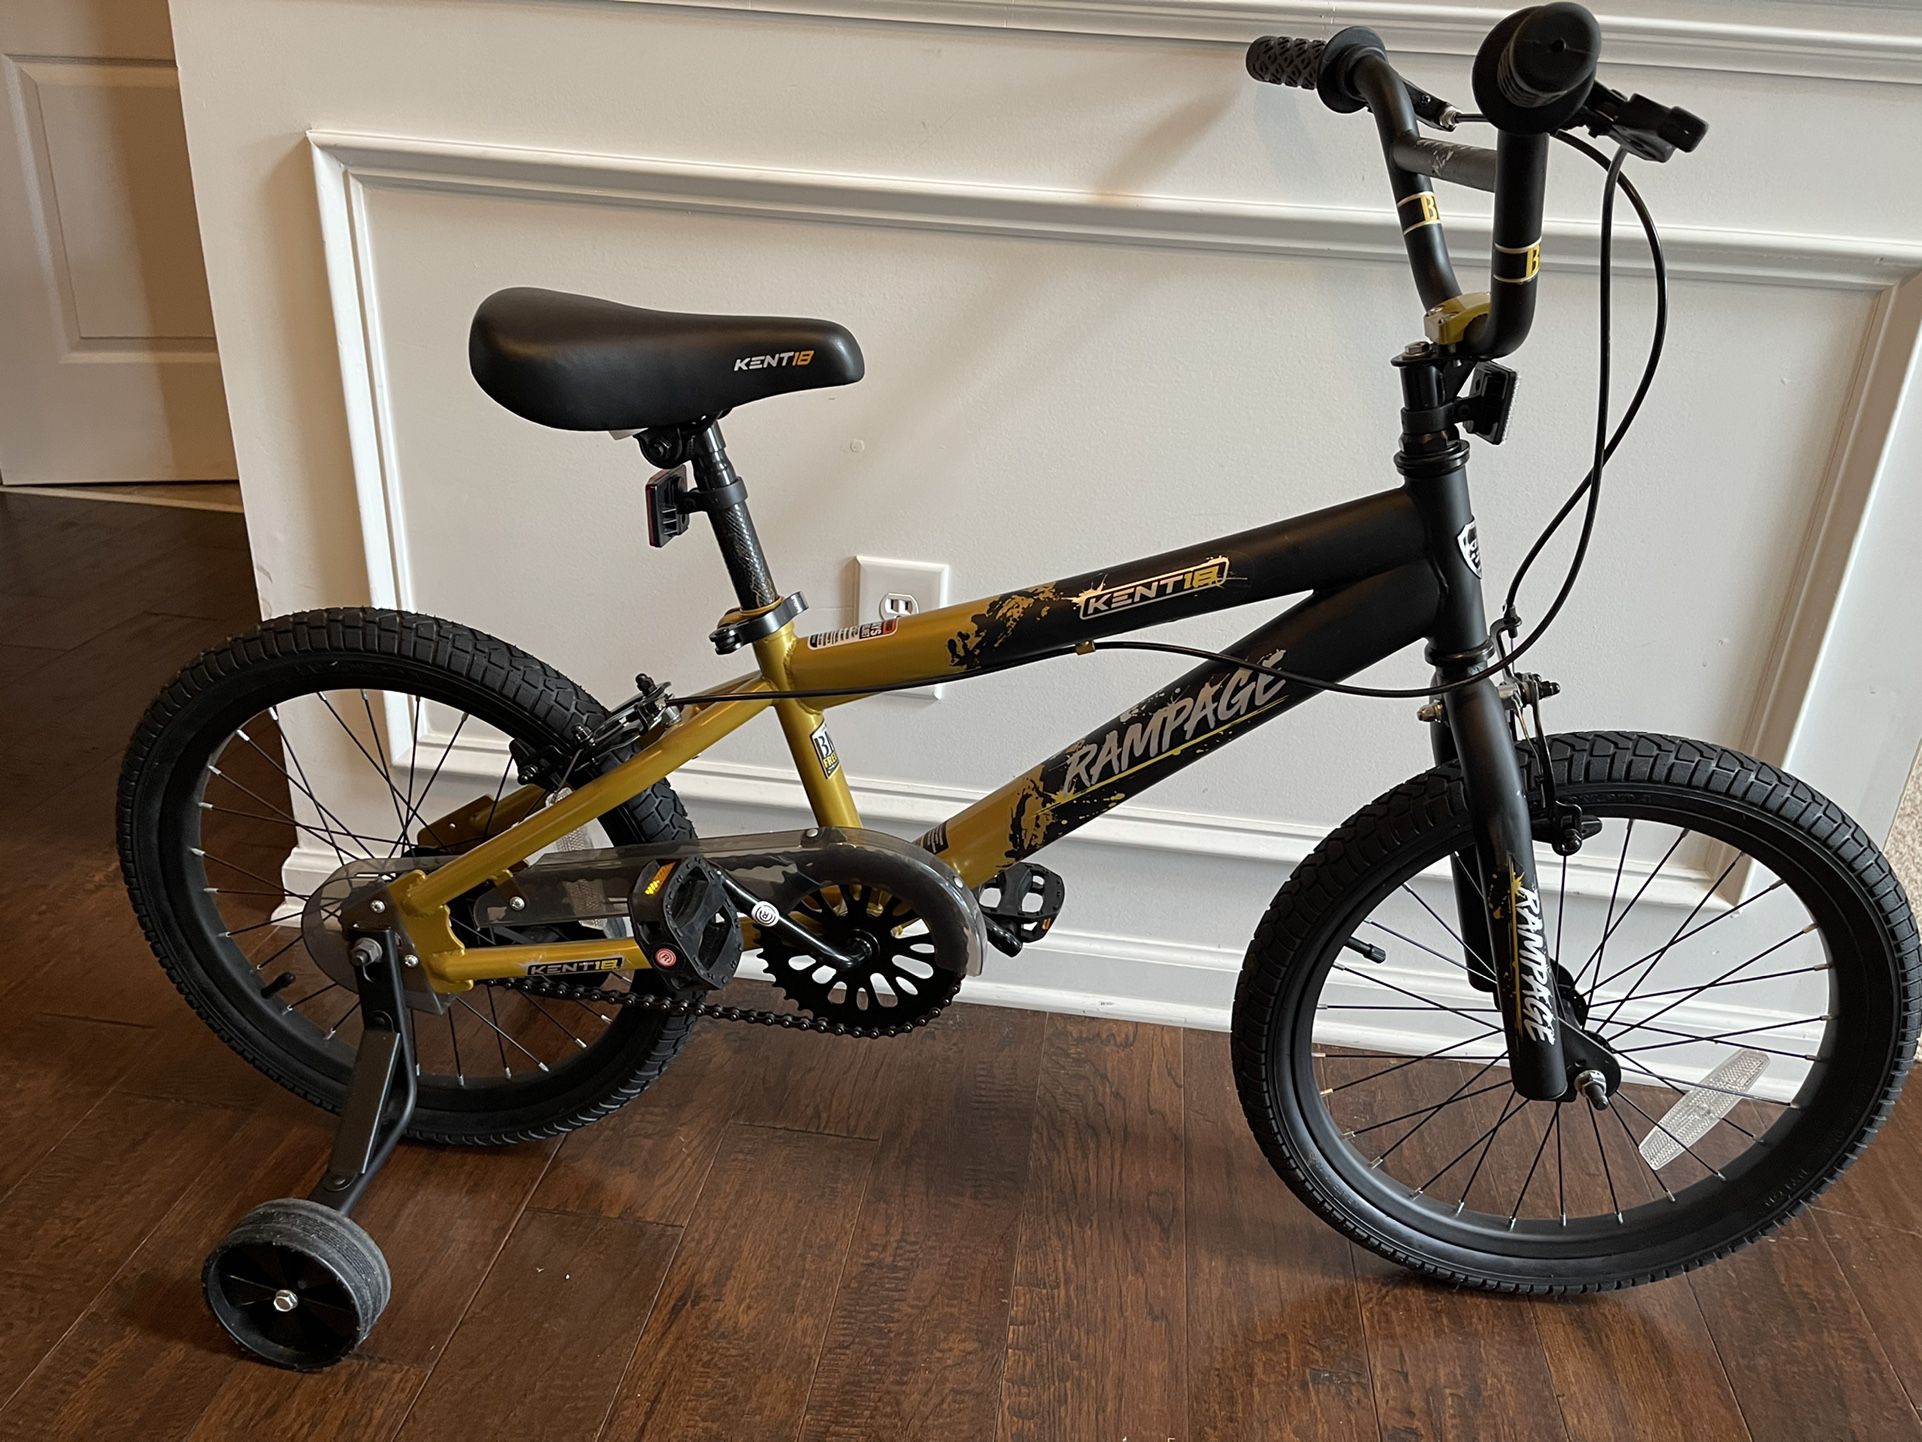 18" Rampage Boy's Bike, Gold/Black - Good Condition 